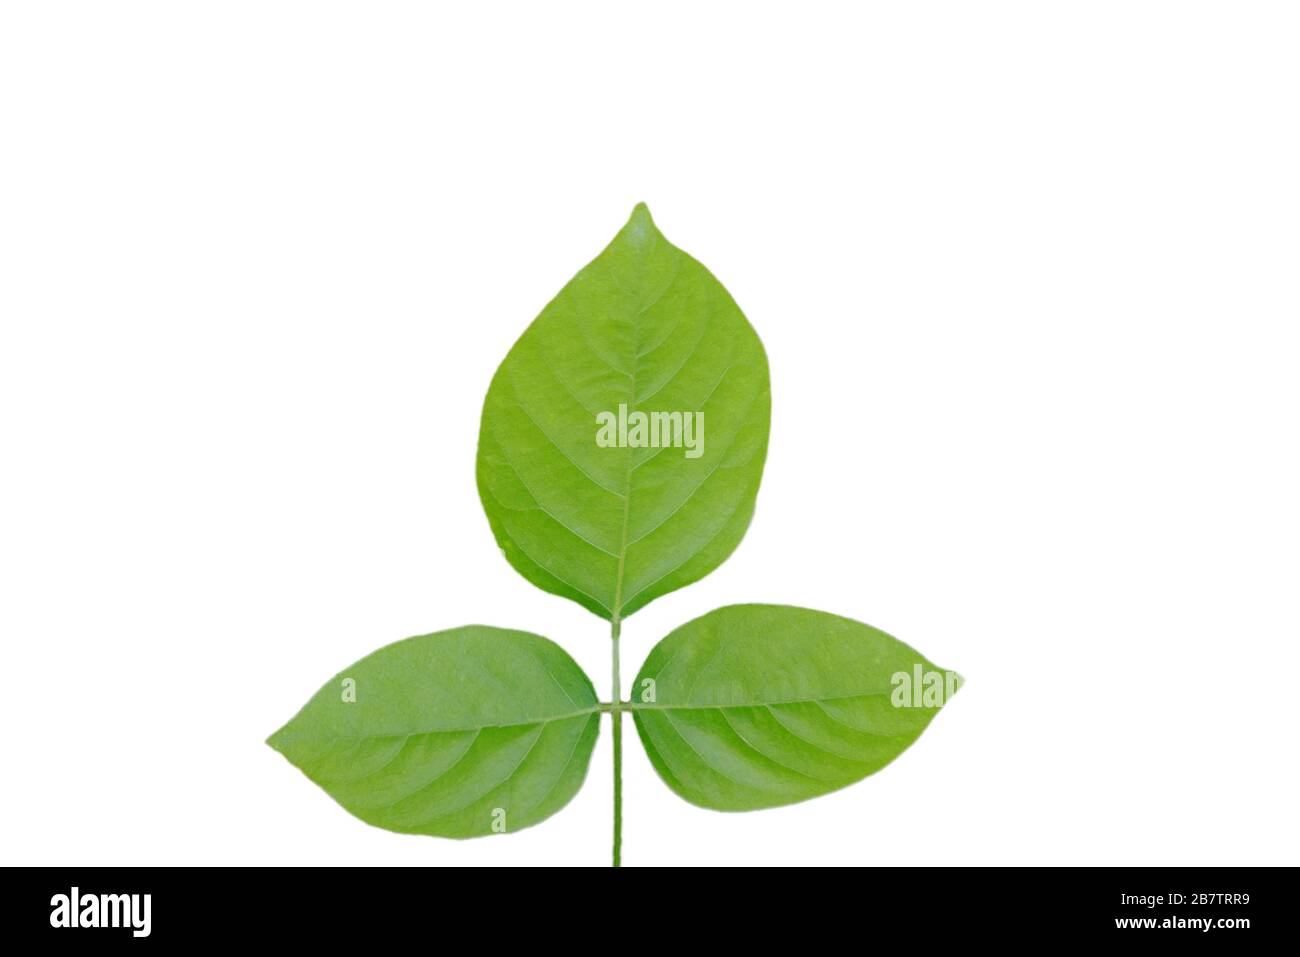 three leaf texture on white background Stock Photo - Alamy